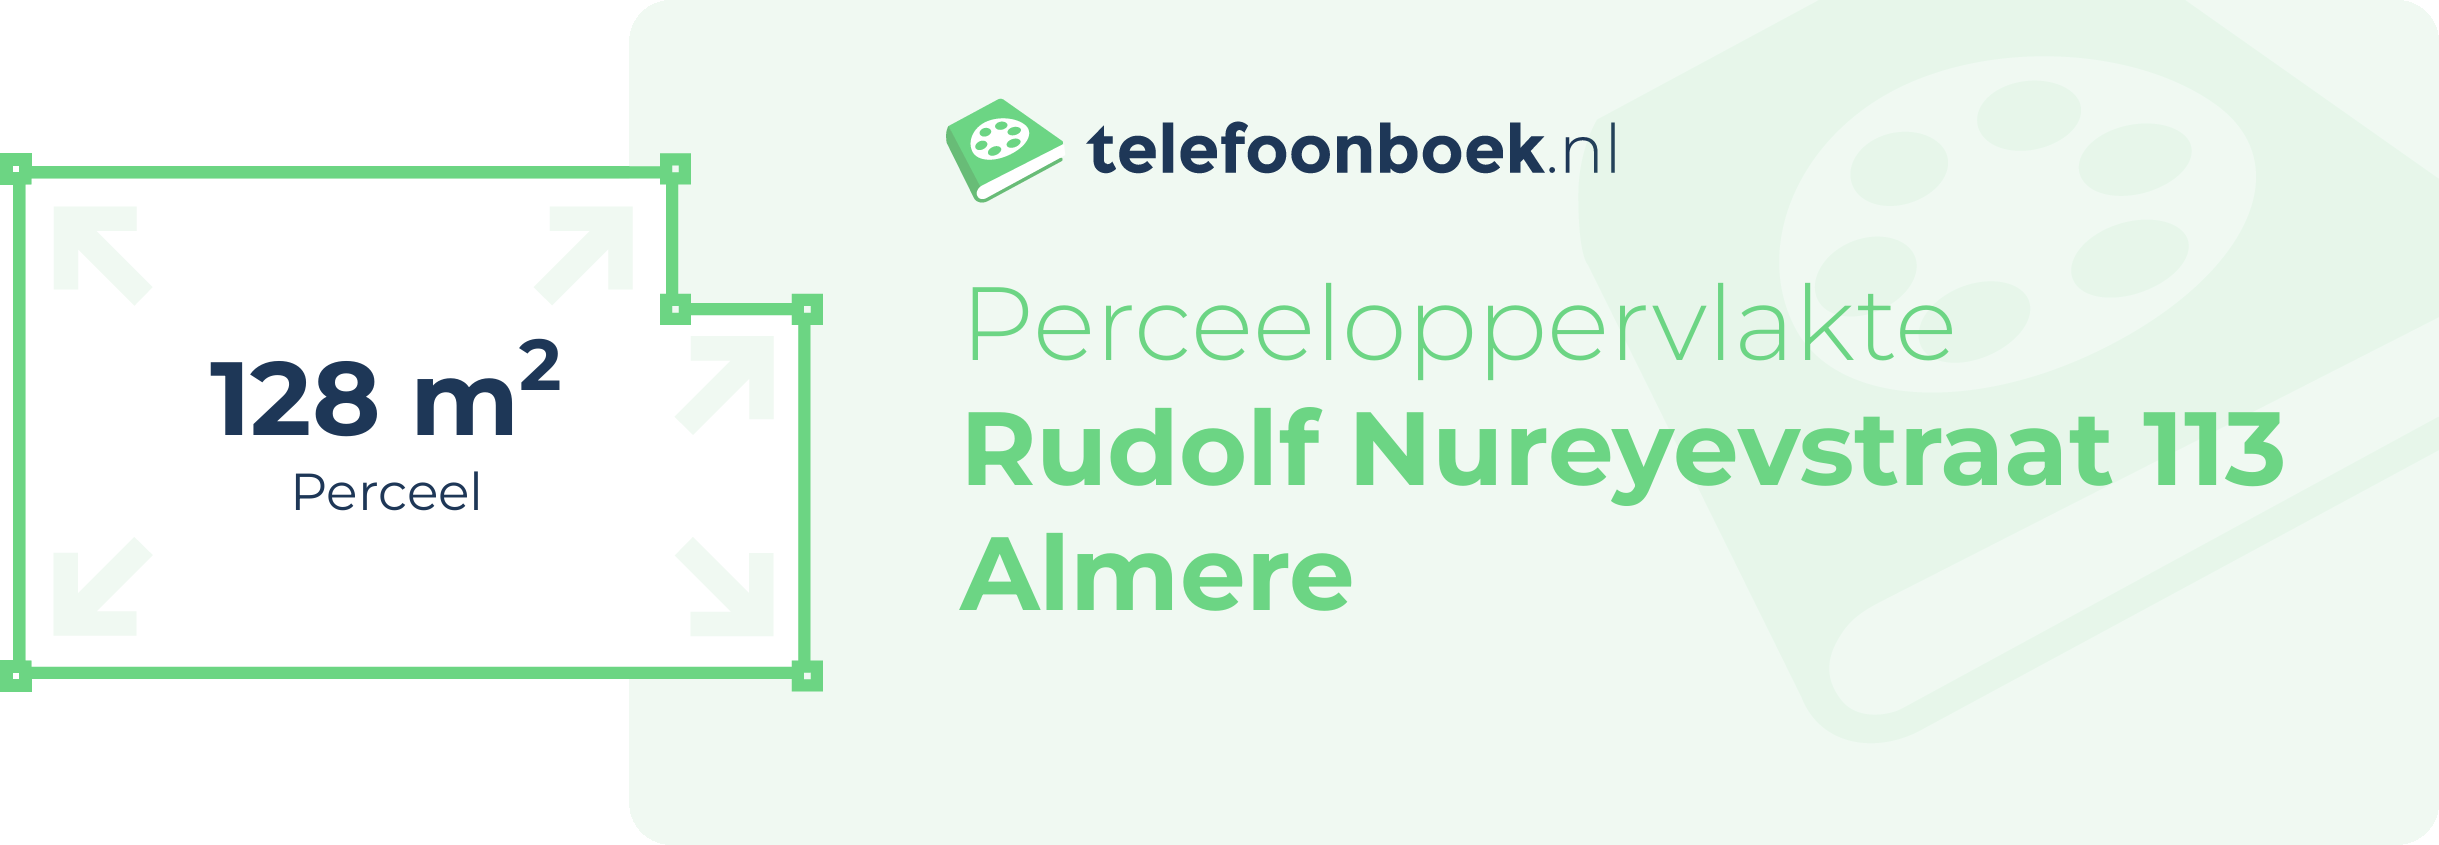 Perceeloppervlakte Rudolf Nureyevstraat 113 Almere